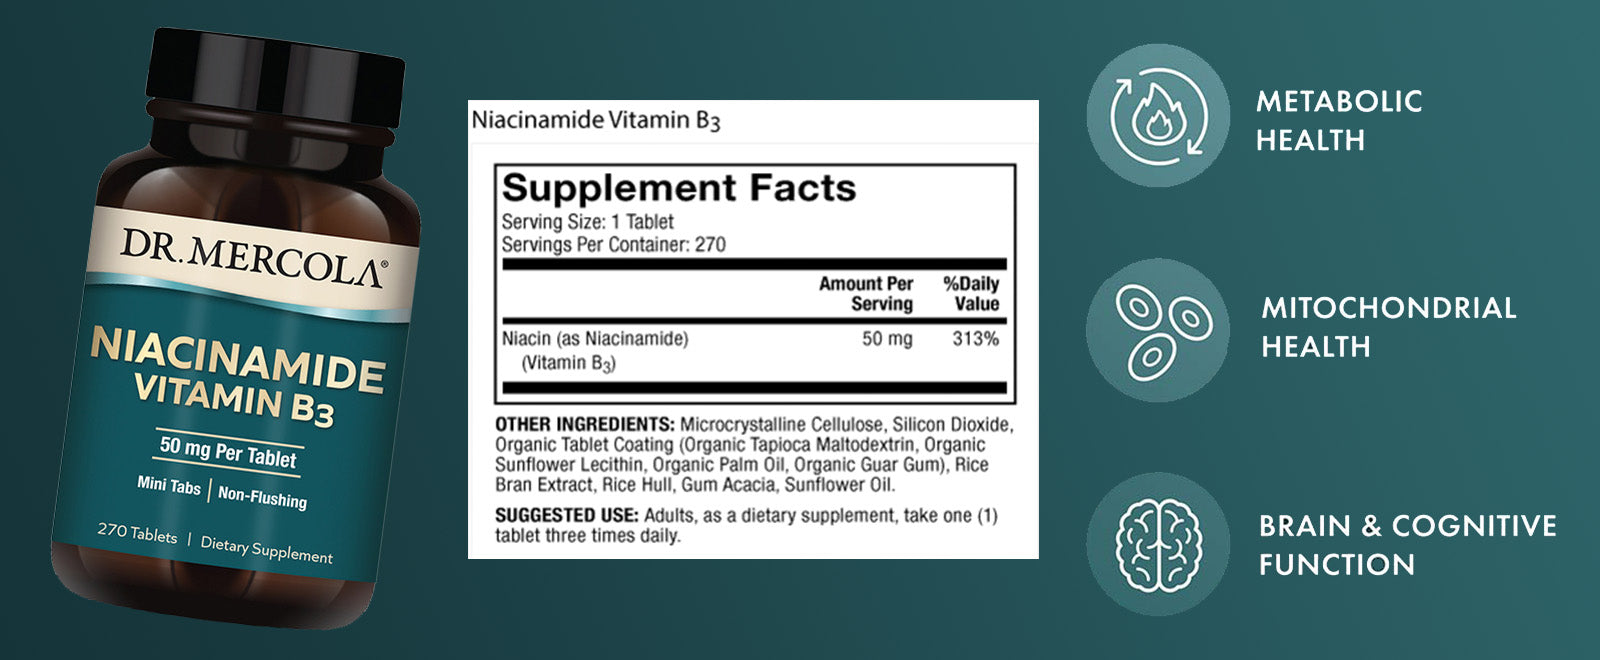 Niacinamide Vitamin B3 - Shop at BiosenseClinic.com - Niacinamide Vitamin B3: Fuel Your Cells, Energize Your Life!